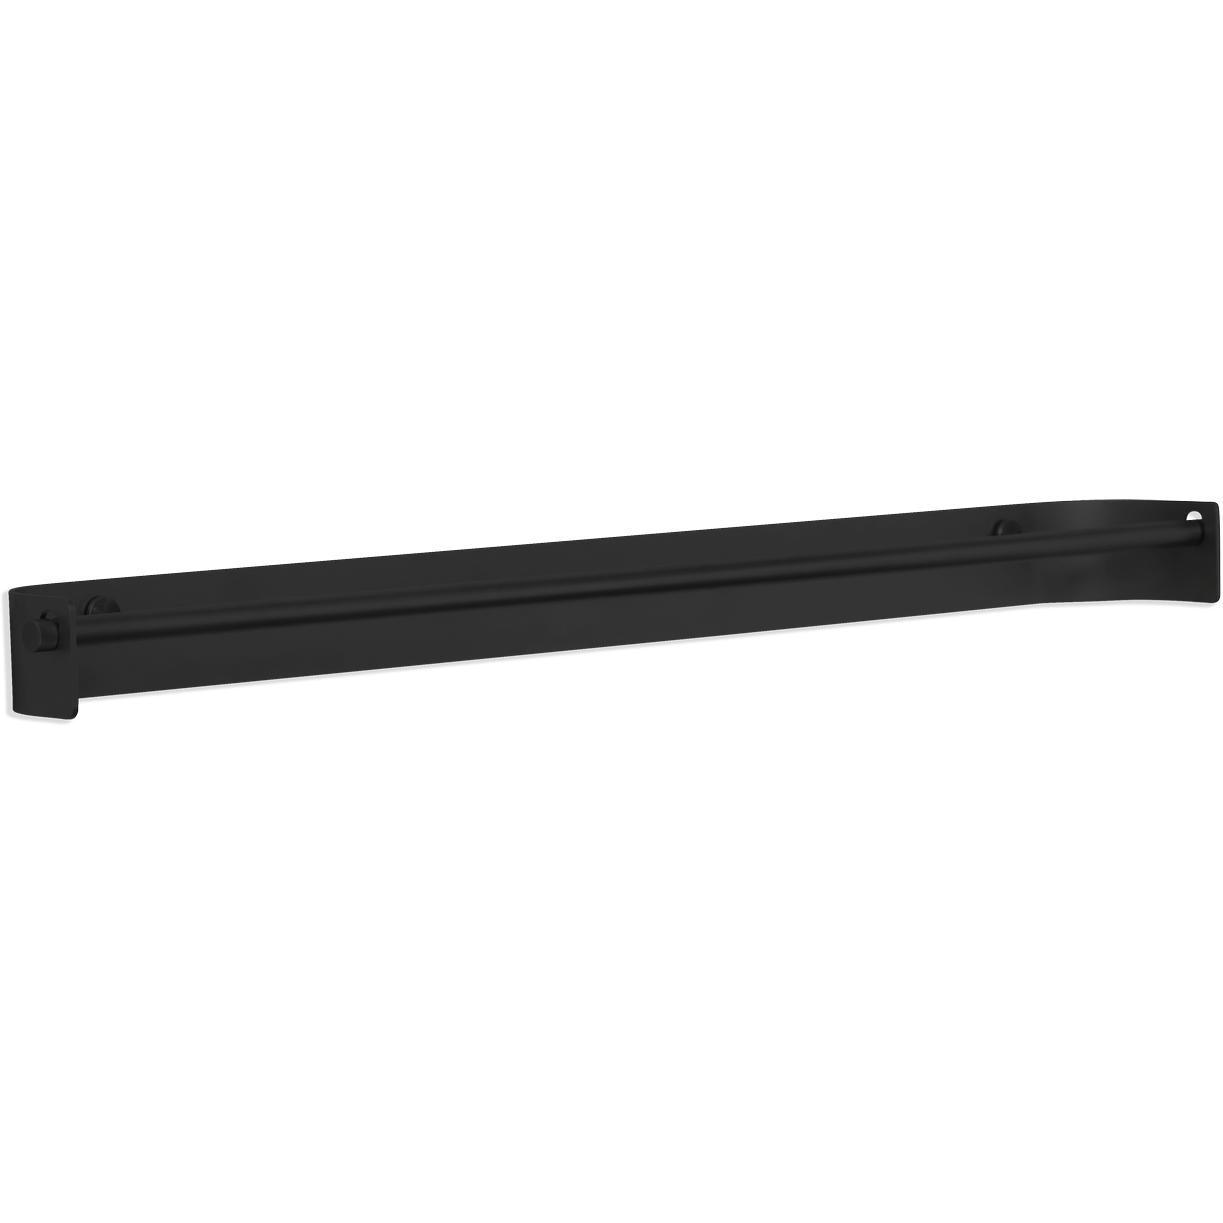 Form & Refine Arc ruční bar. Černá ocel